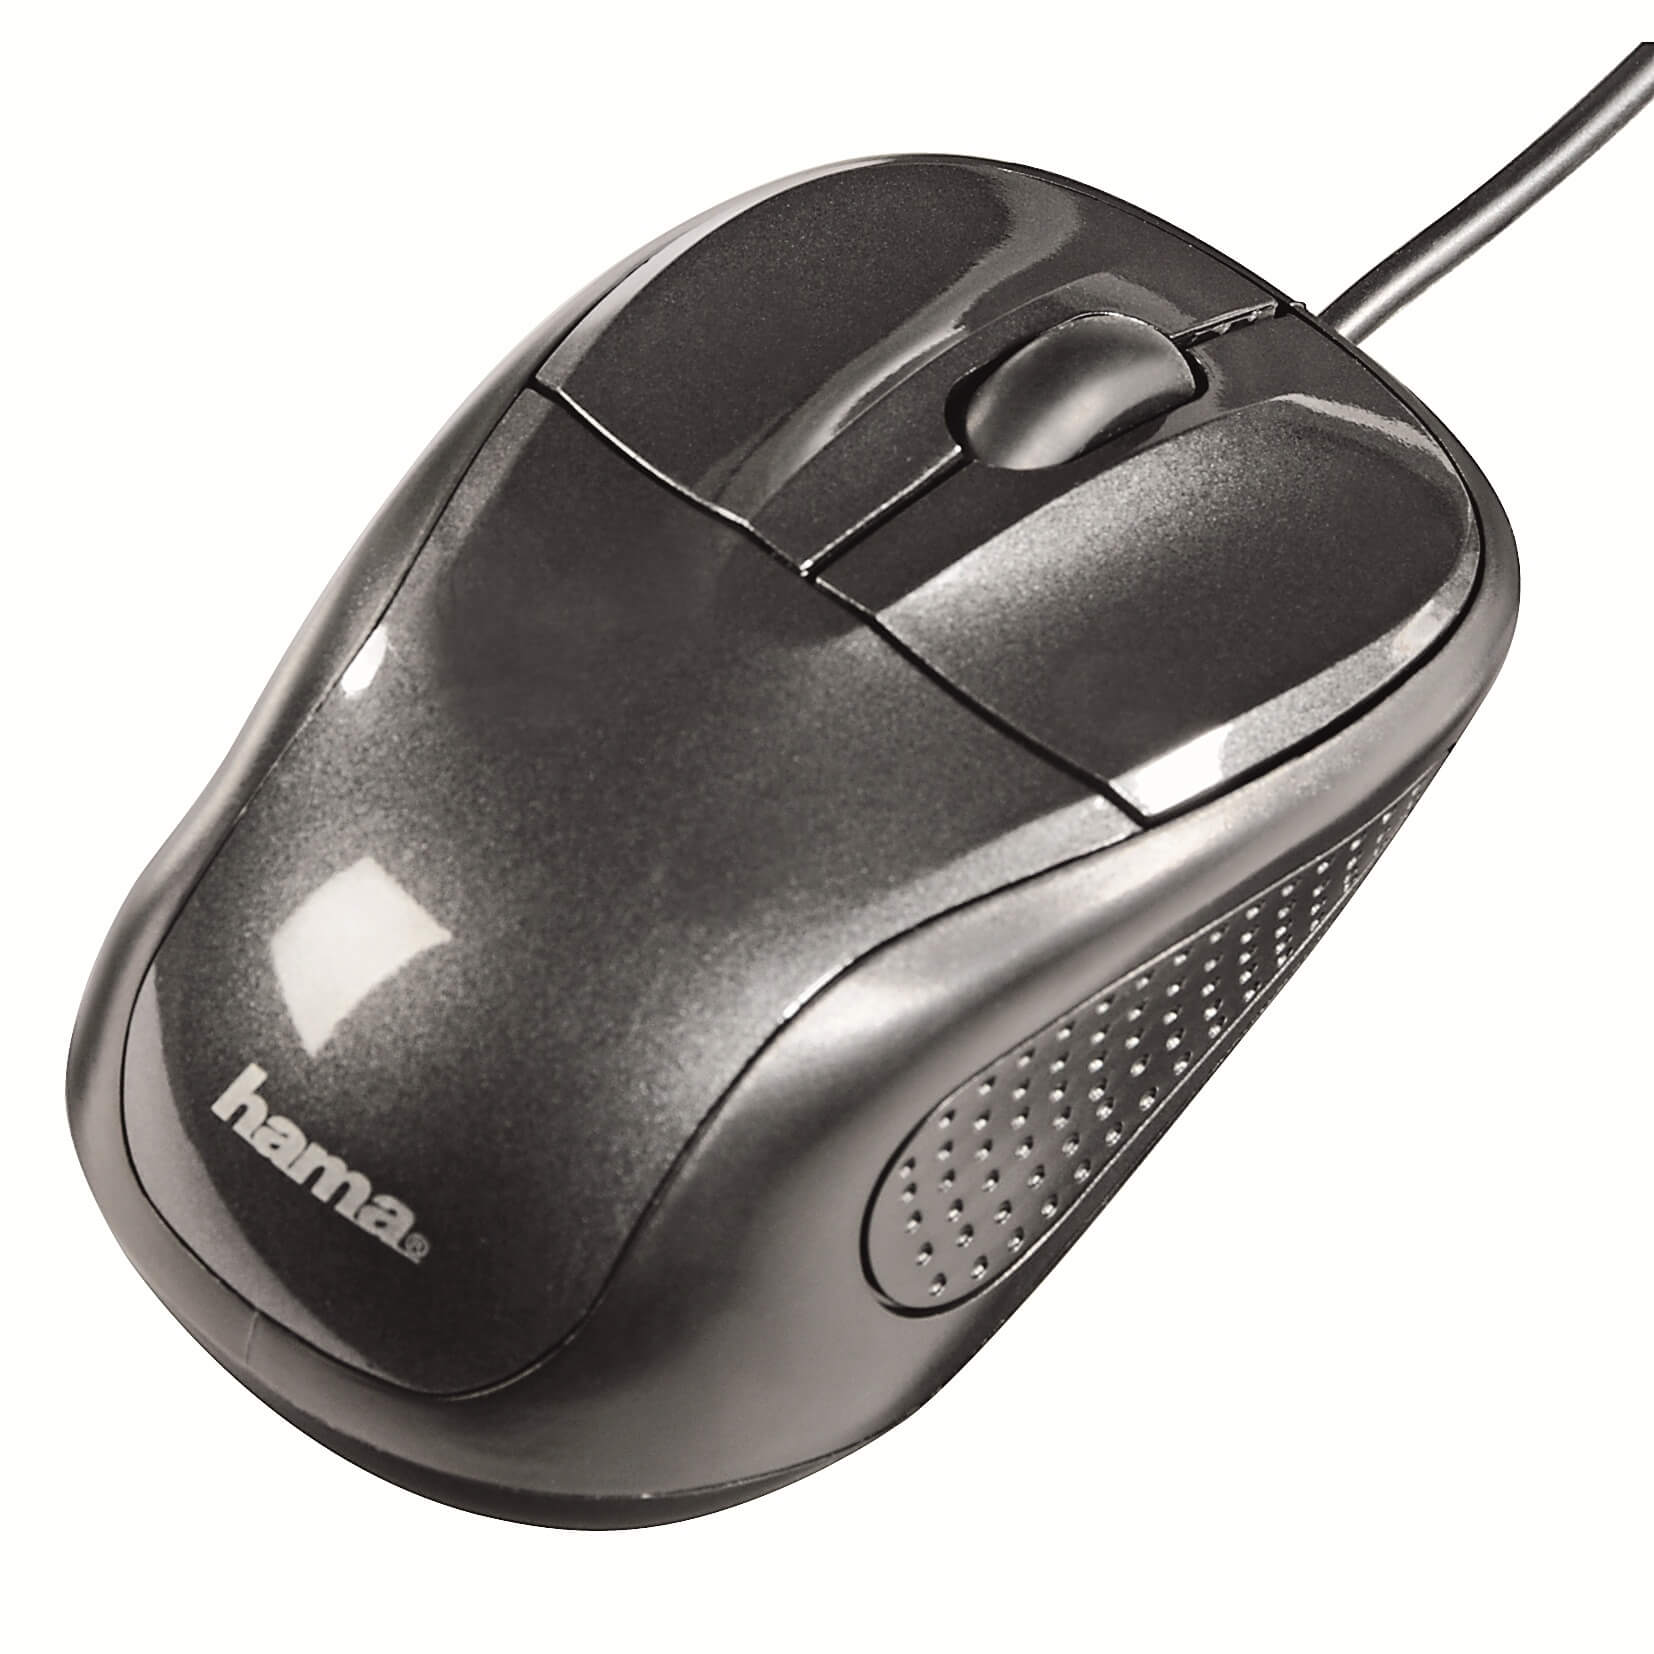  Mouse USB wired Hama AM-100 Negru 